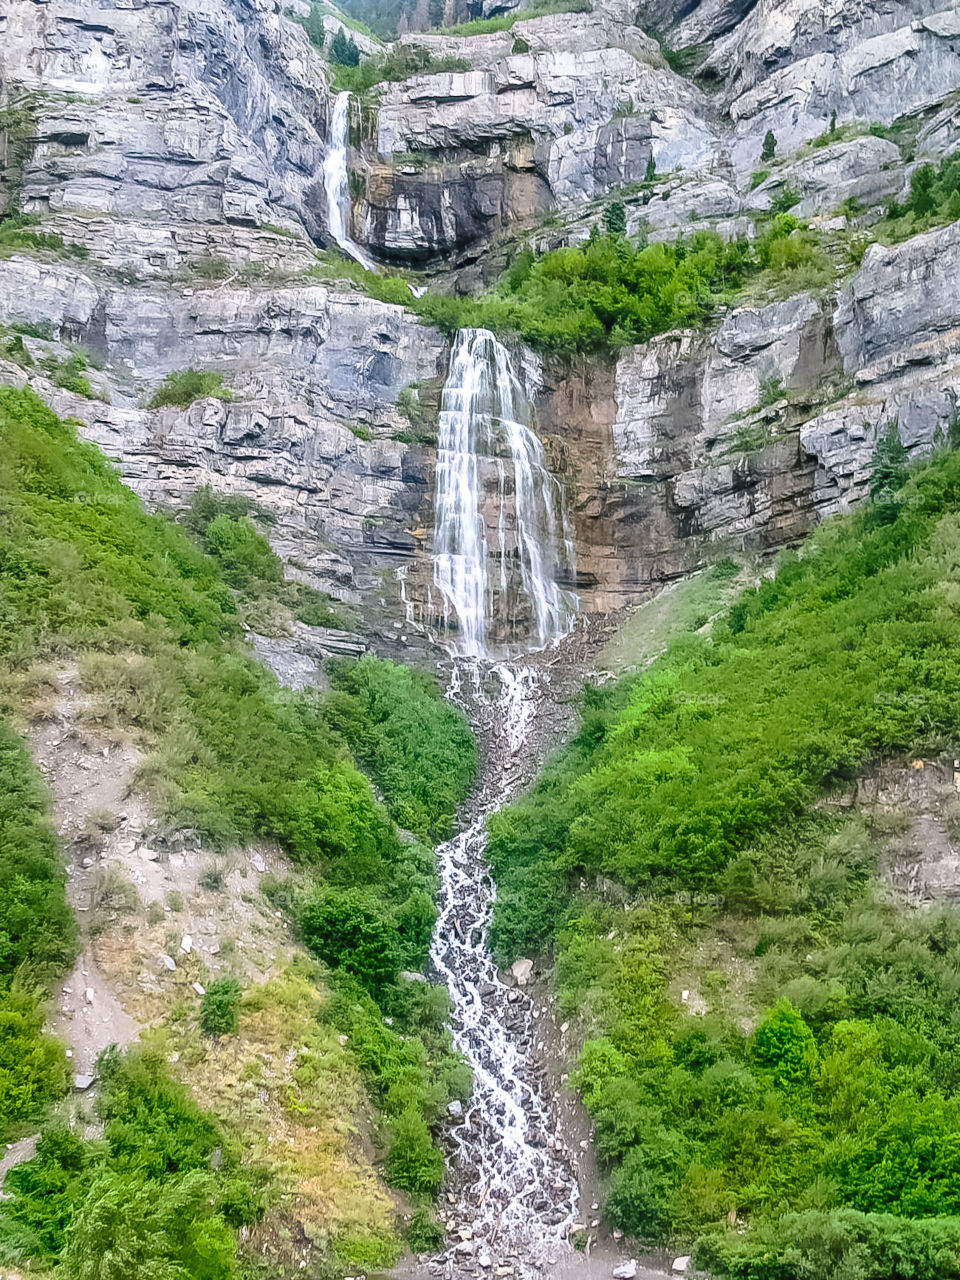 White vale waterfall in Salt Lake city 